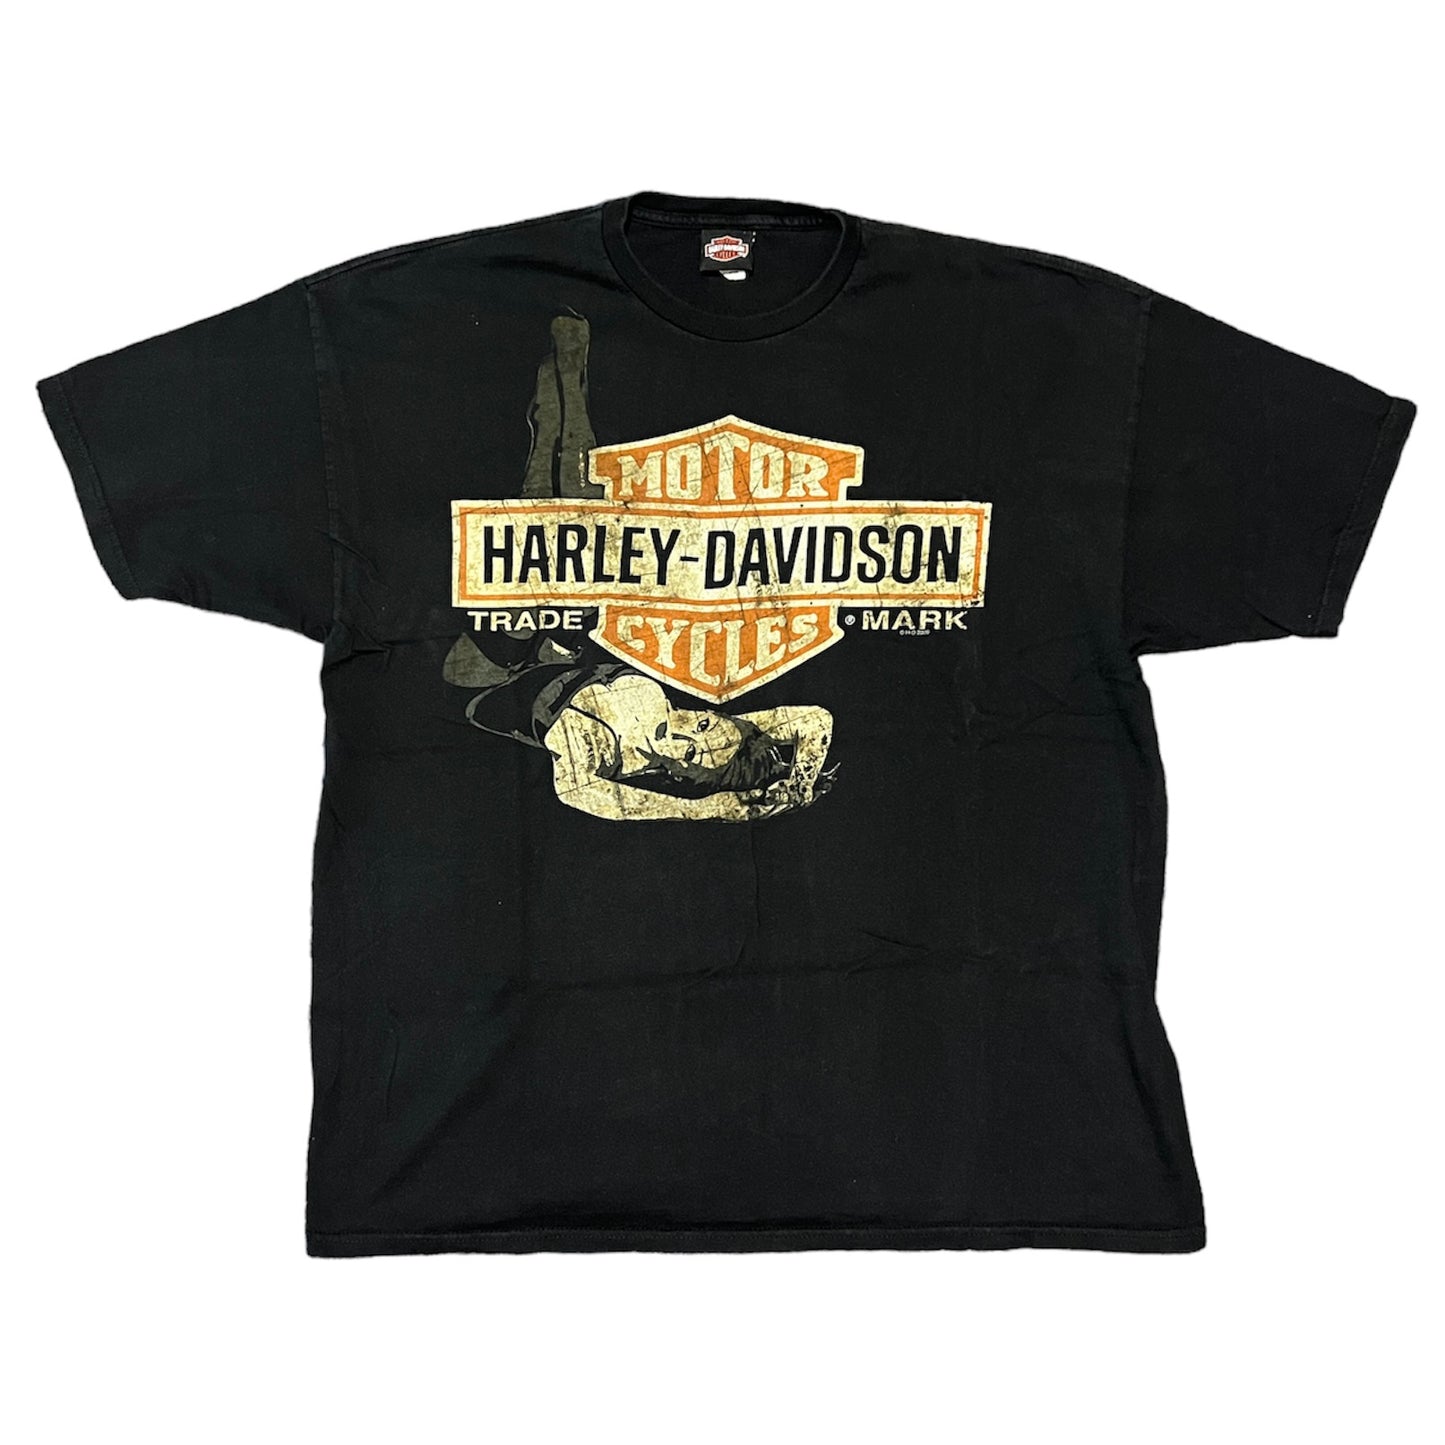 Harley Davidson Wolverine Clinton Township T-Shirt Size 2XL